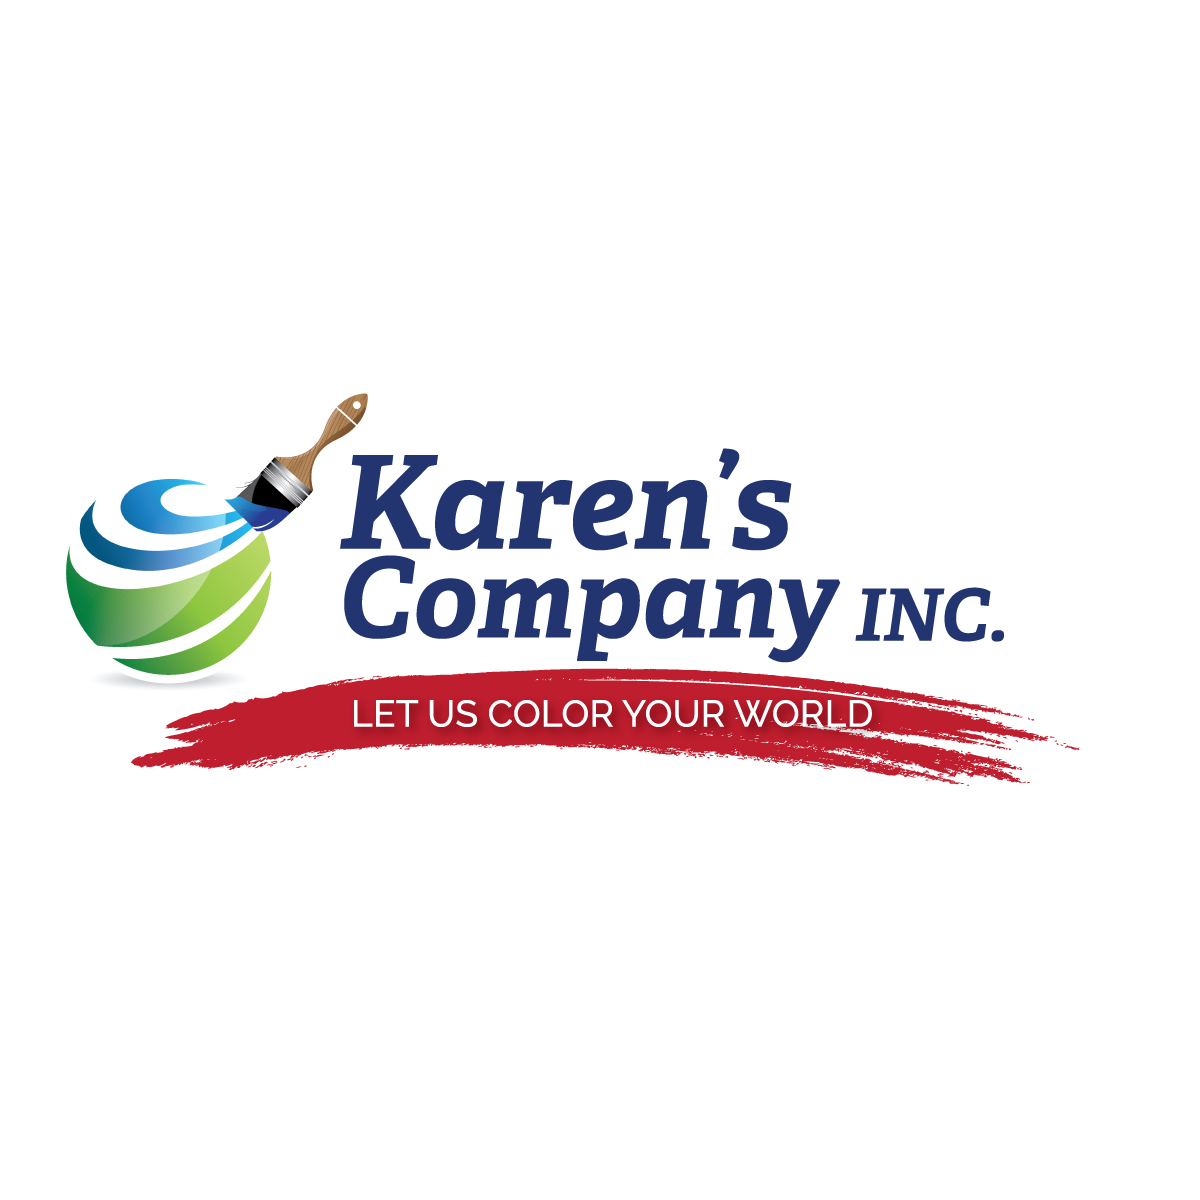 Karen's Company Inc. Logo